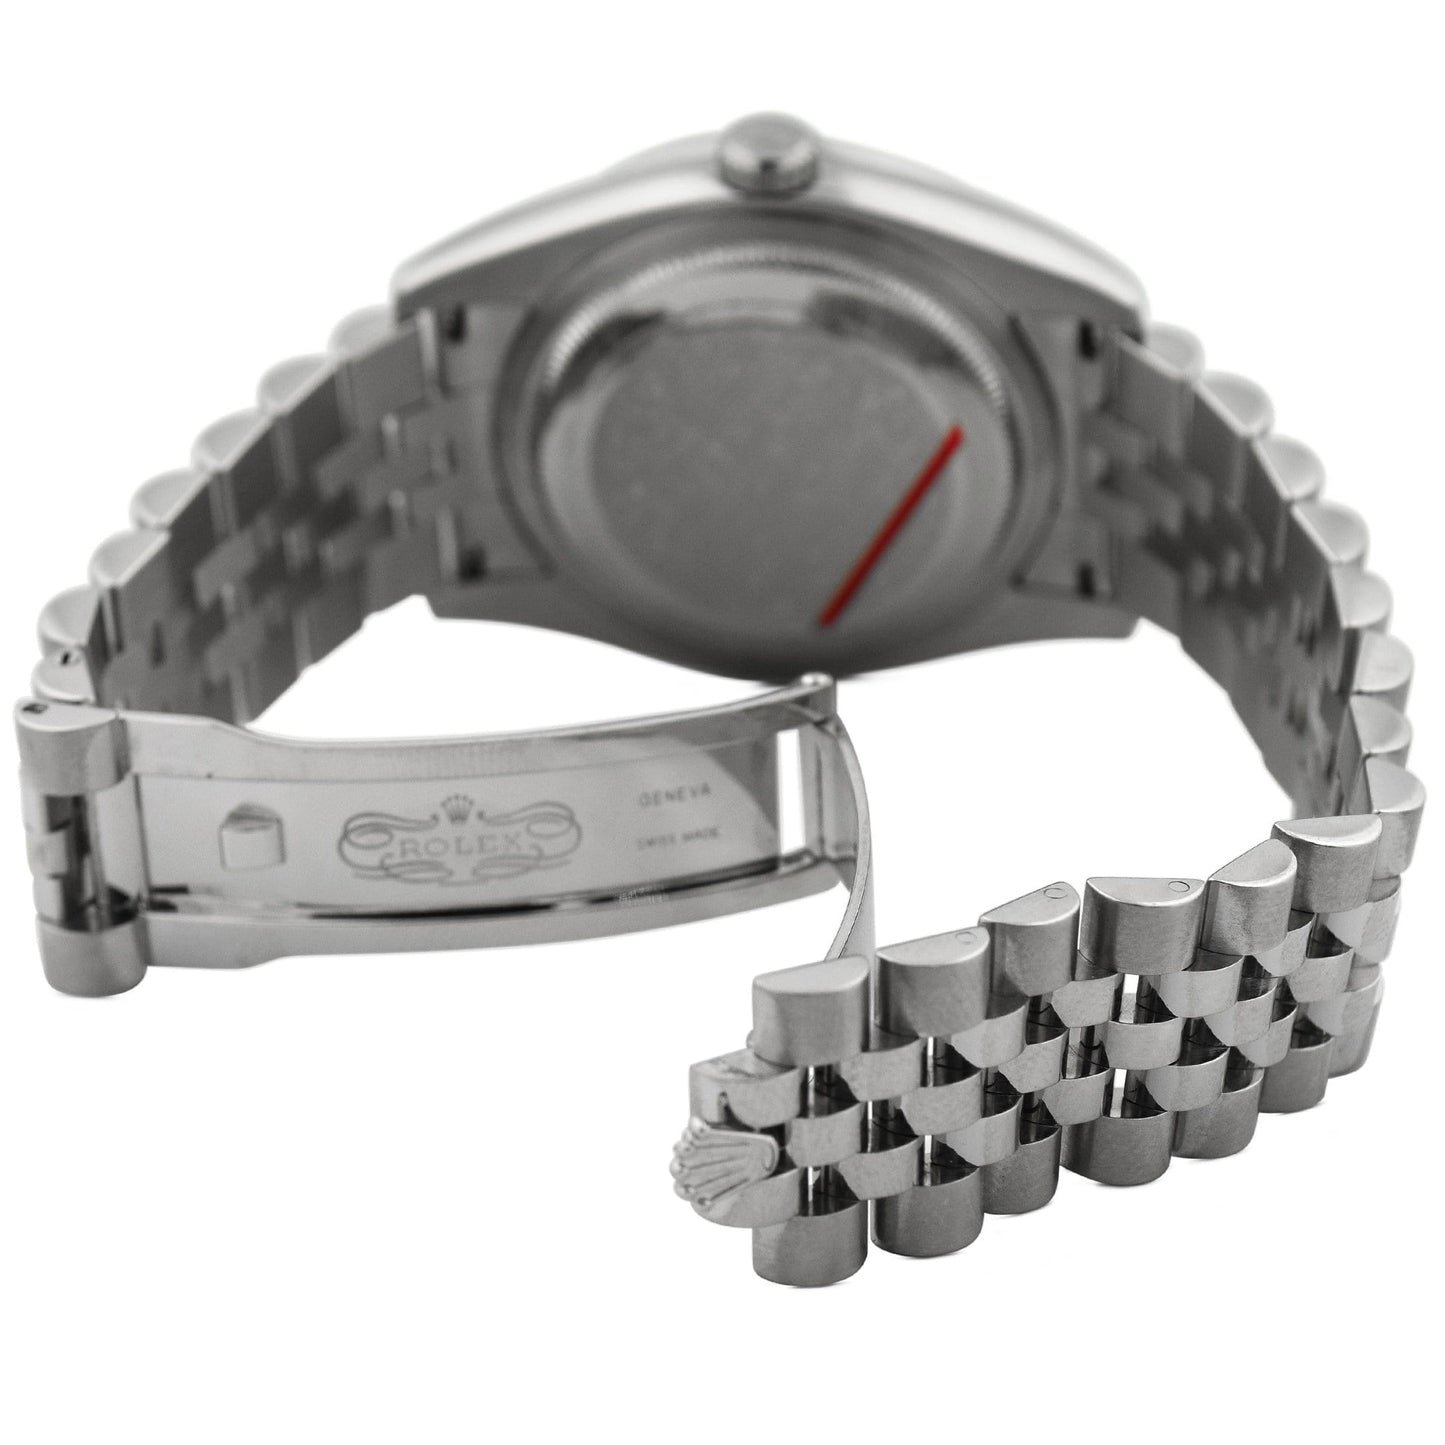 Rolex Datejust Stainless Steel 36mm White MOP Diamond Dial Watch Reference #: 116234 - Happy Jewelers Fine Jewelry Lifetime Warranty